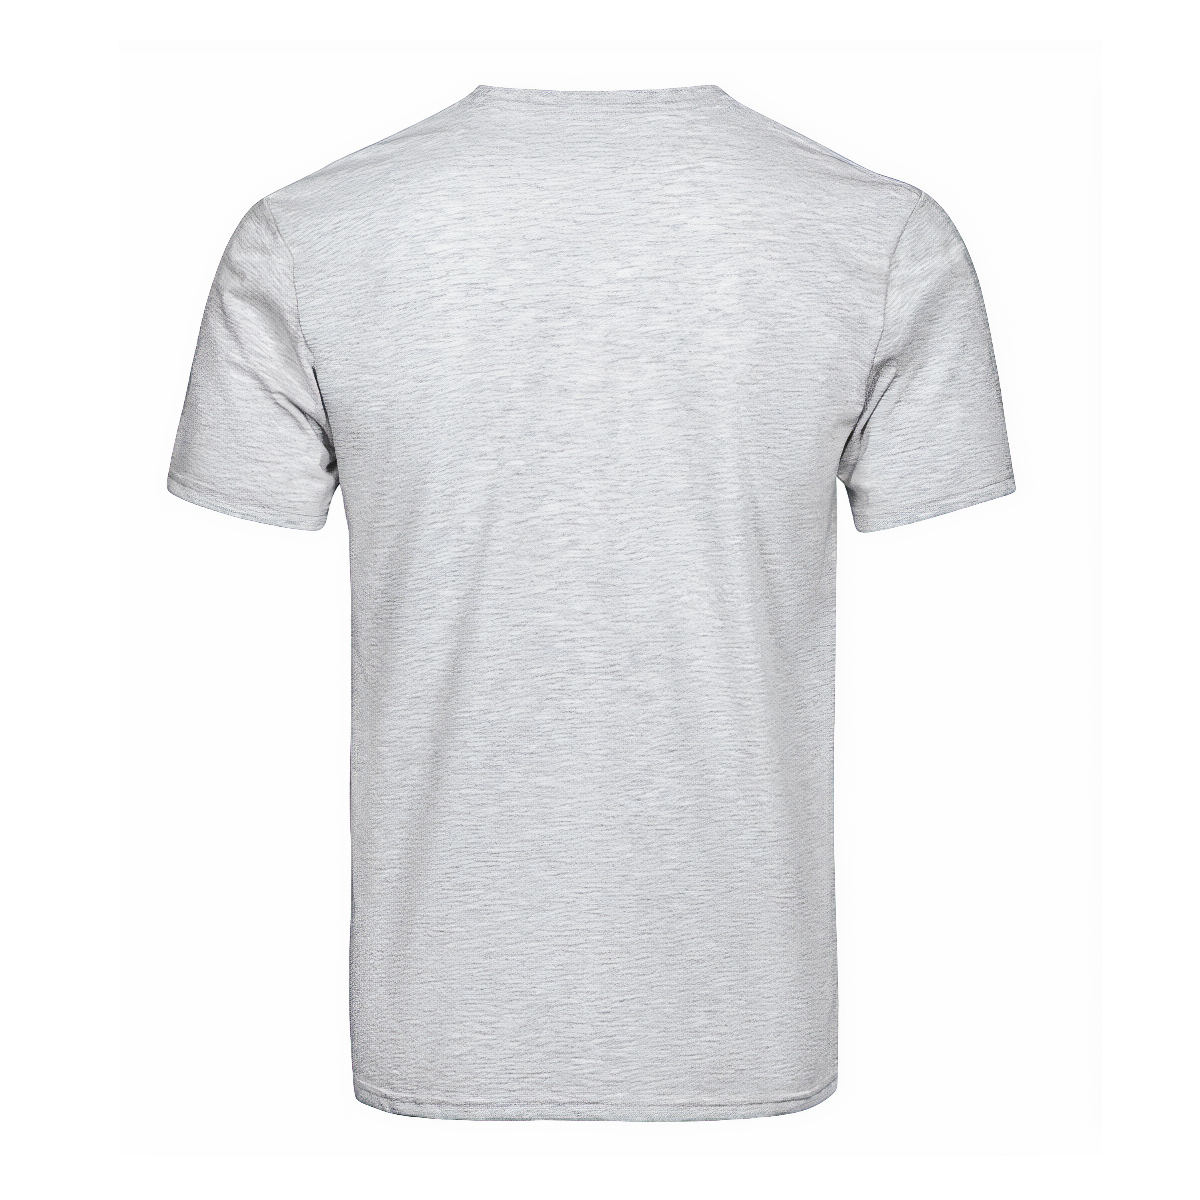 Whiteford Tartan Crest T-shirt - I'm not yelling style